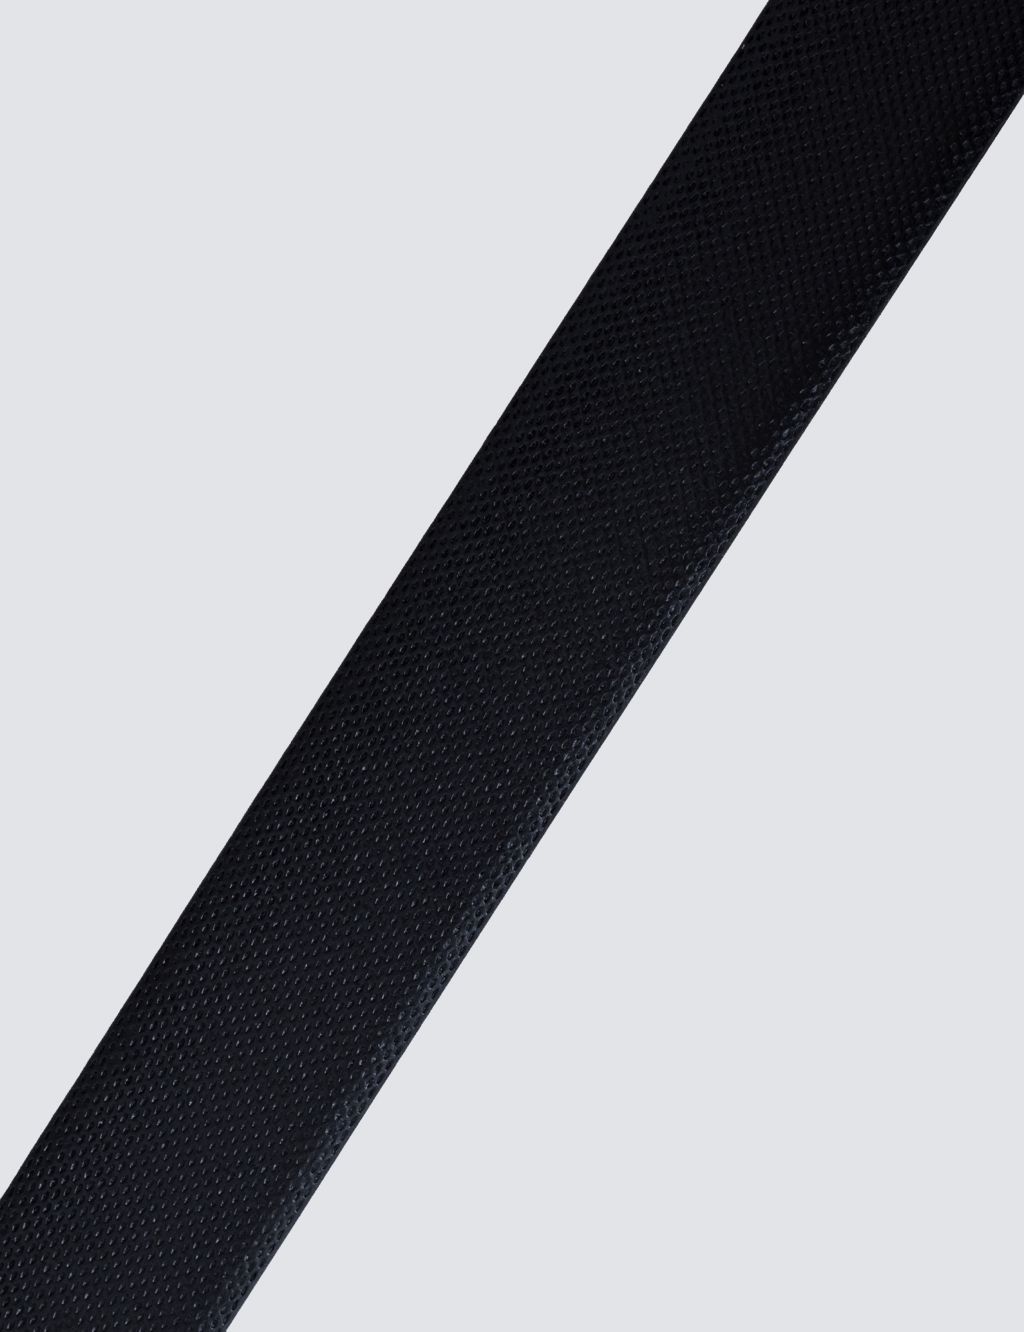 Leather Textured Reversible Belt image 4